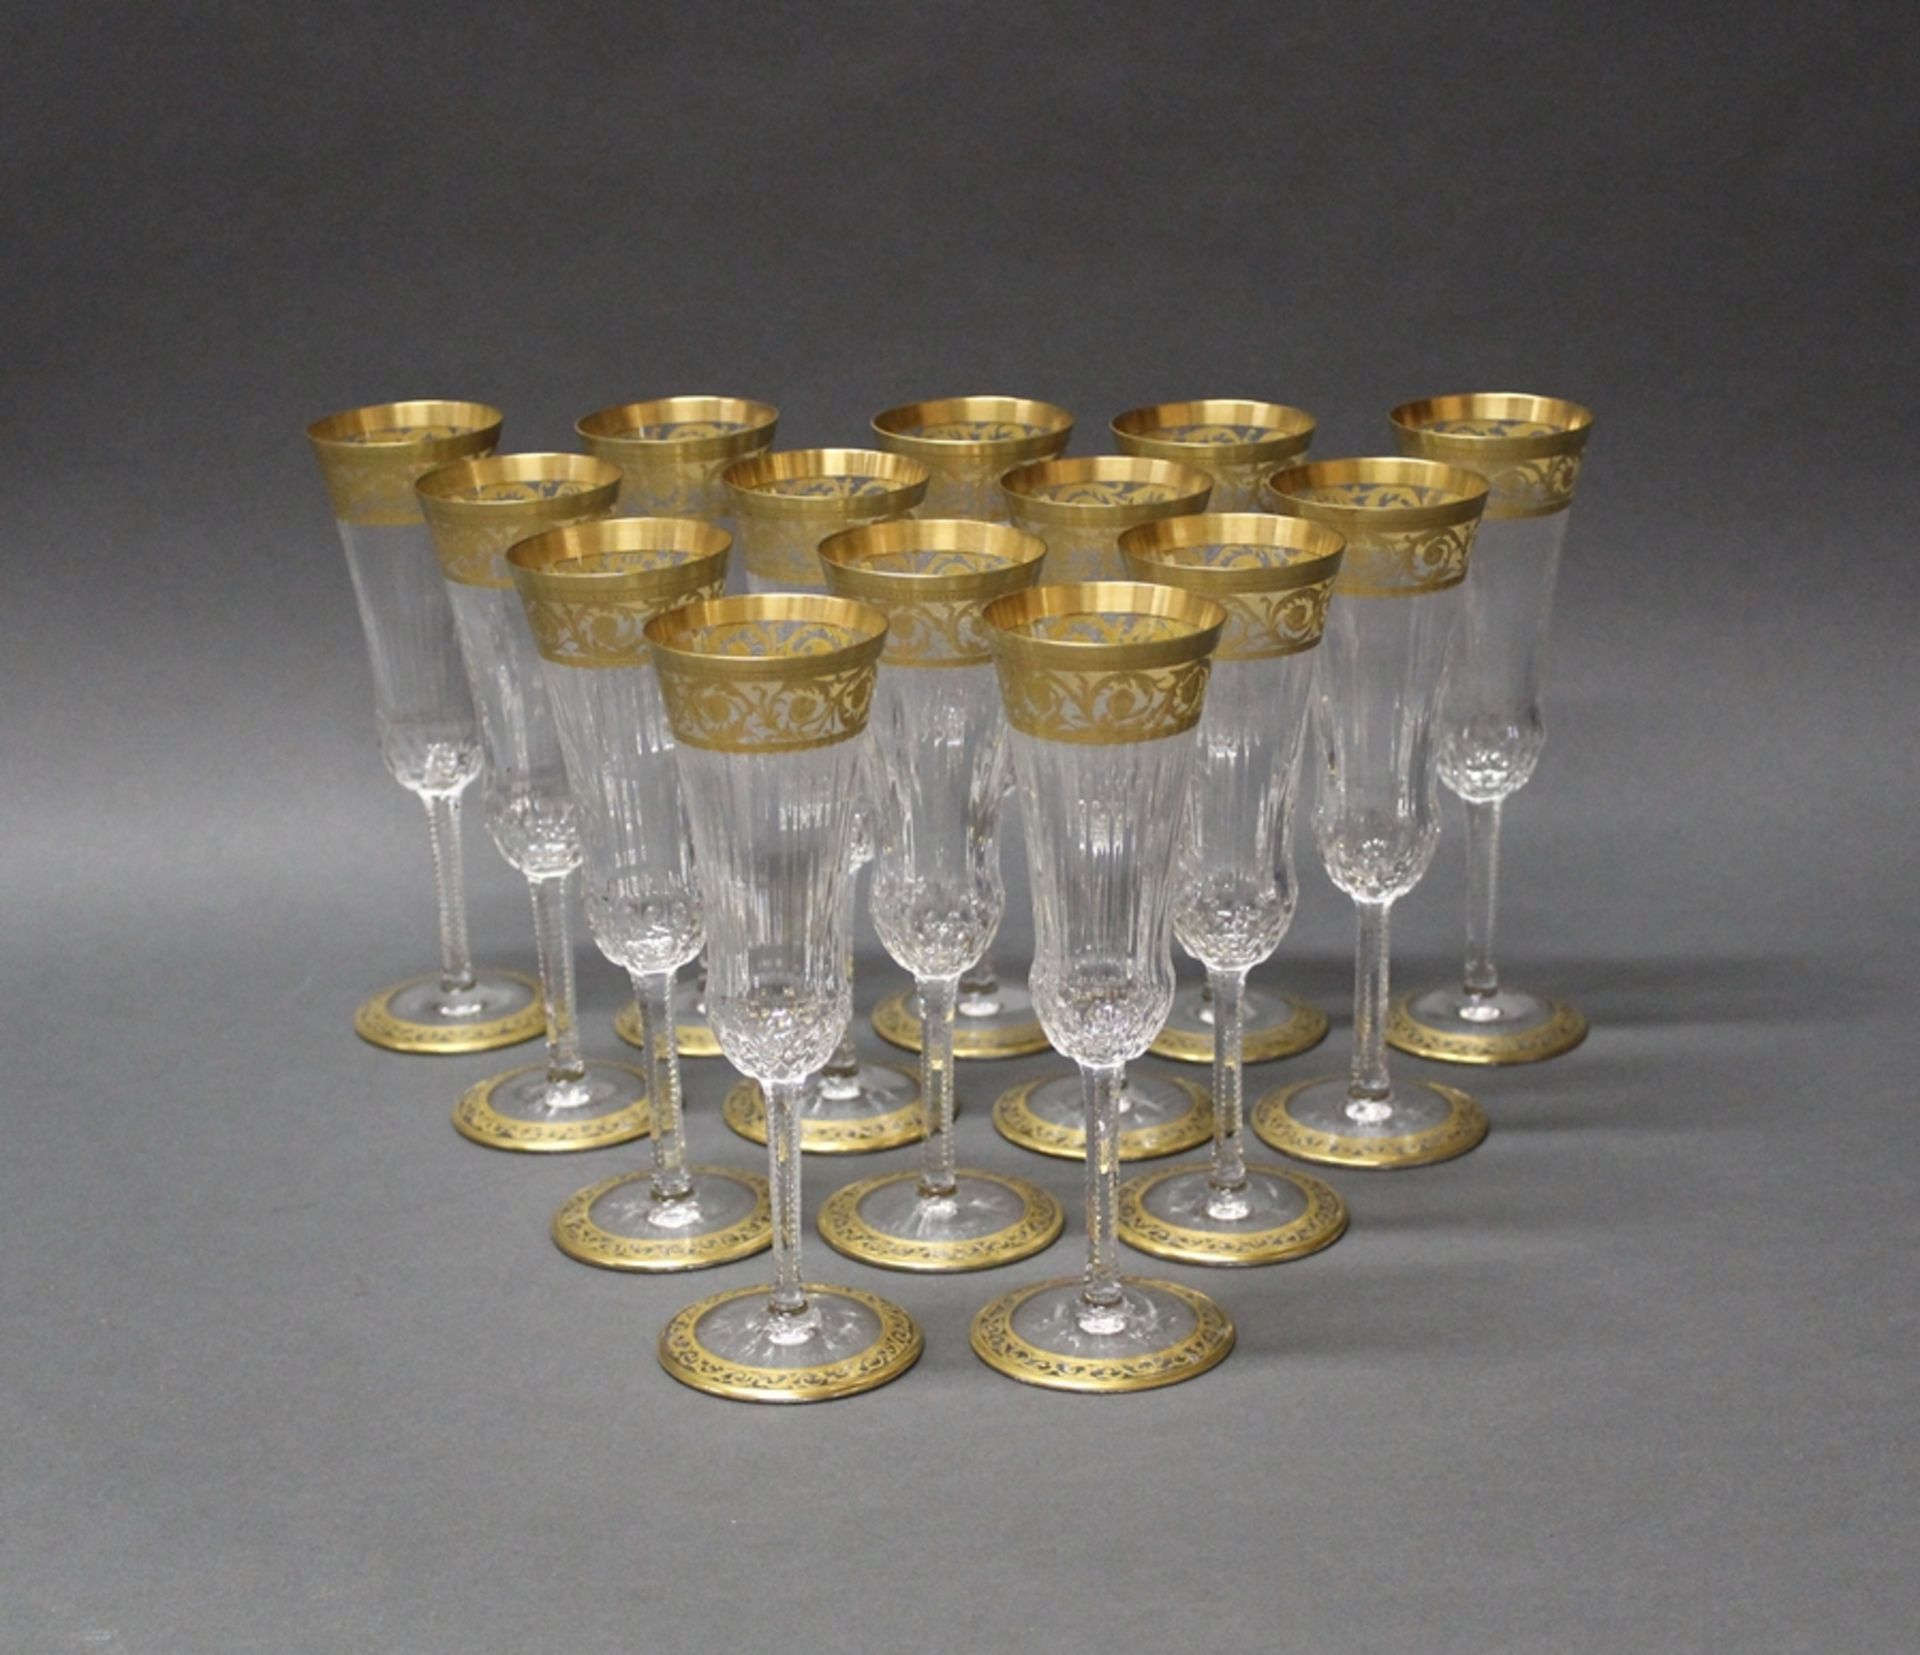 14 Champagnerflöten, "Thistle", Cristallerie Saint Louis, 2. Hälfte 20. Jh., Dekor Thistle Gold, fa